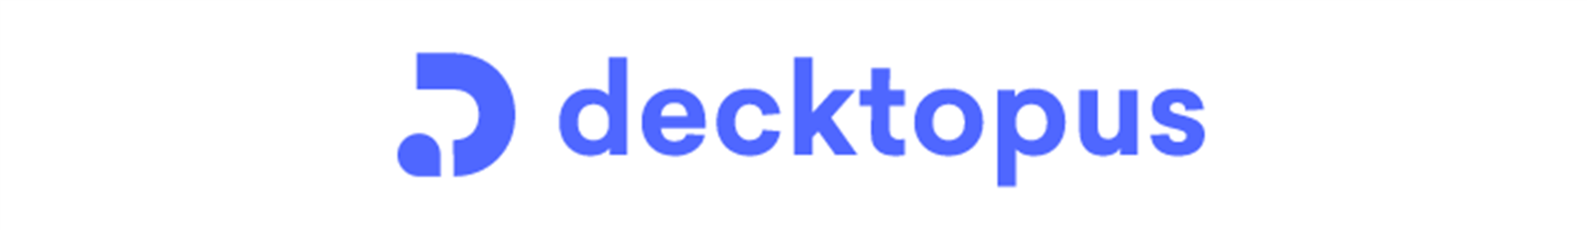 decktopus logo